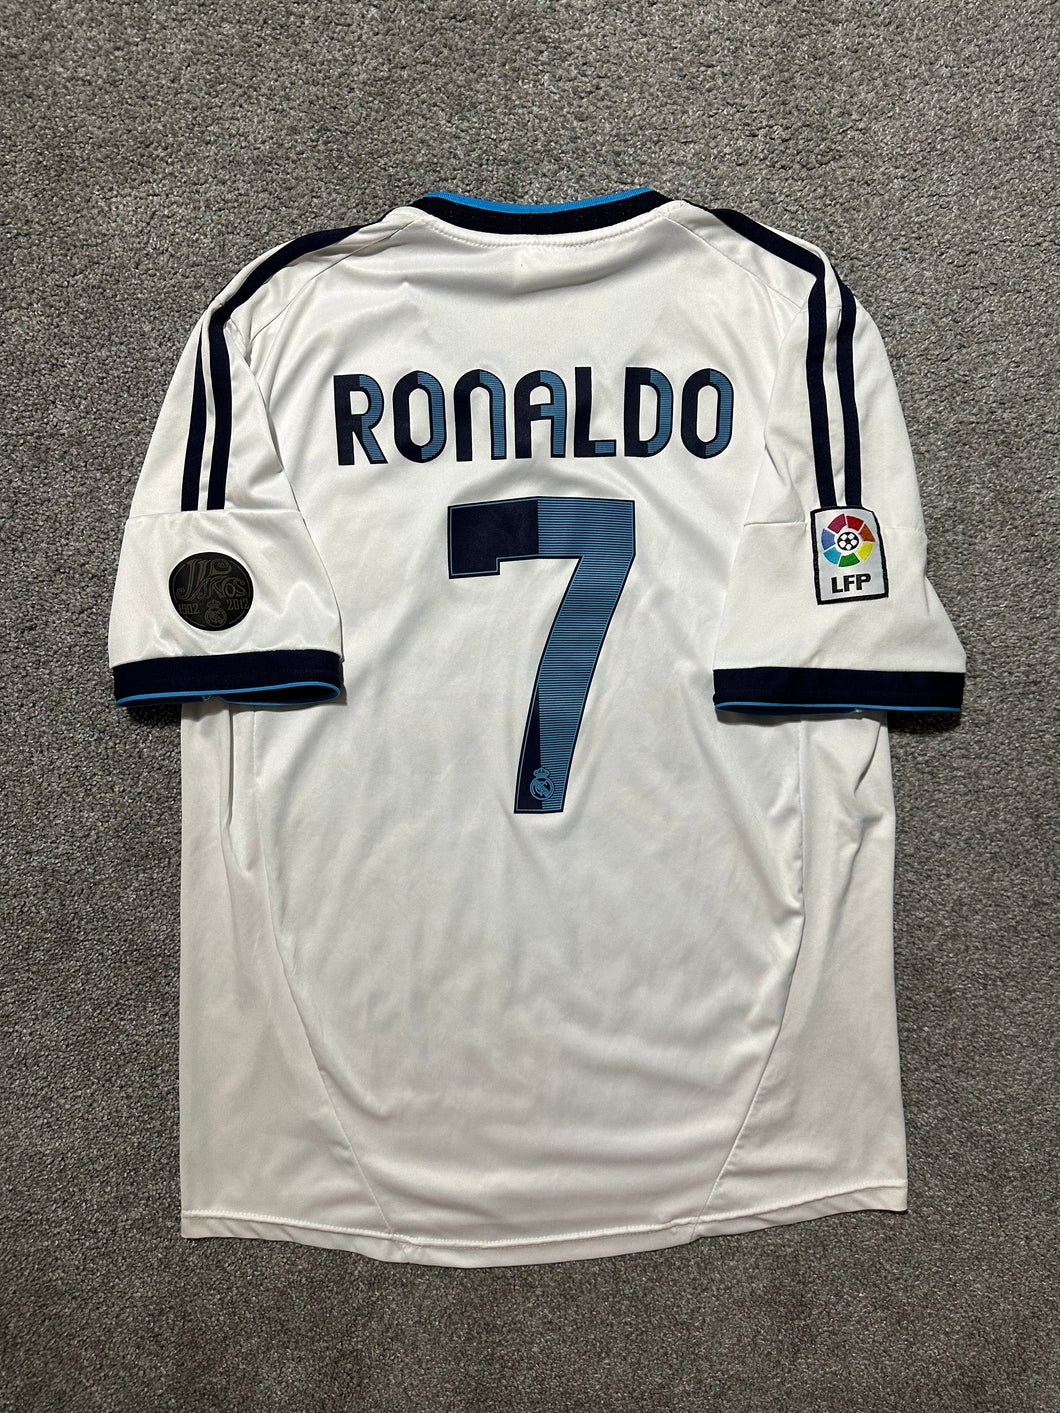 2012 Cristiano Ronaldo Real Madrid Jersey (Large)